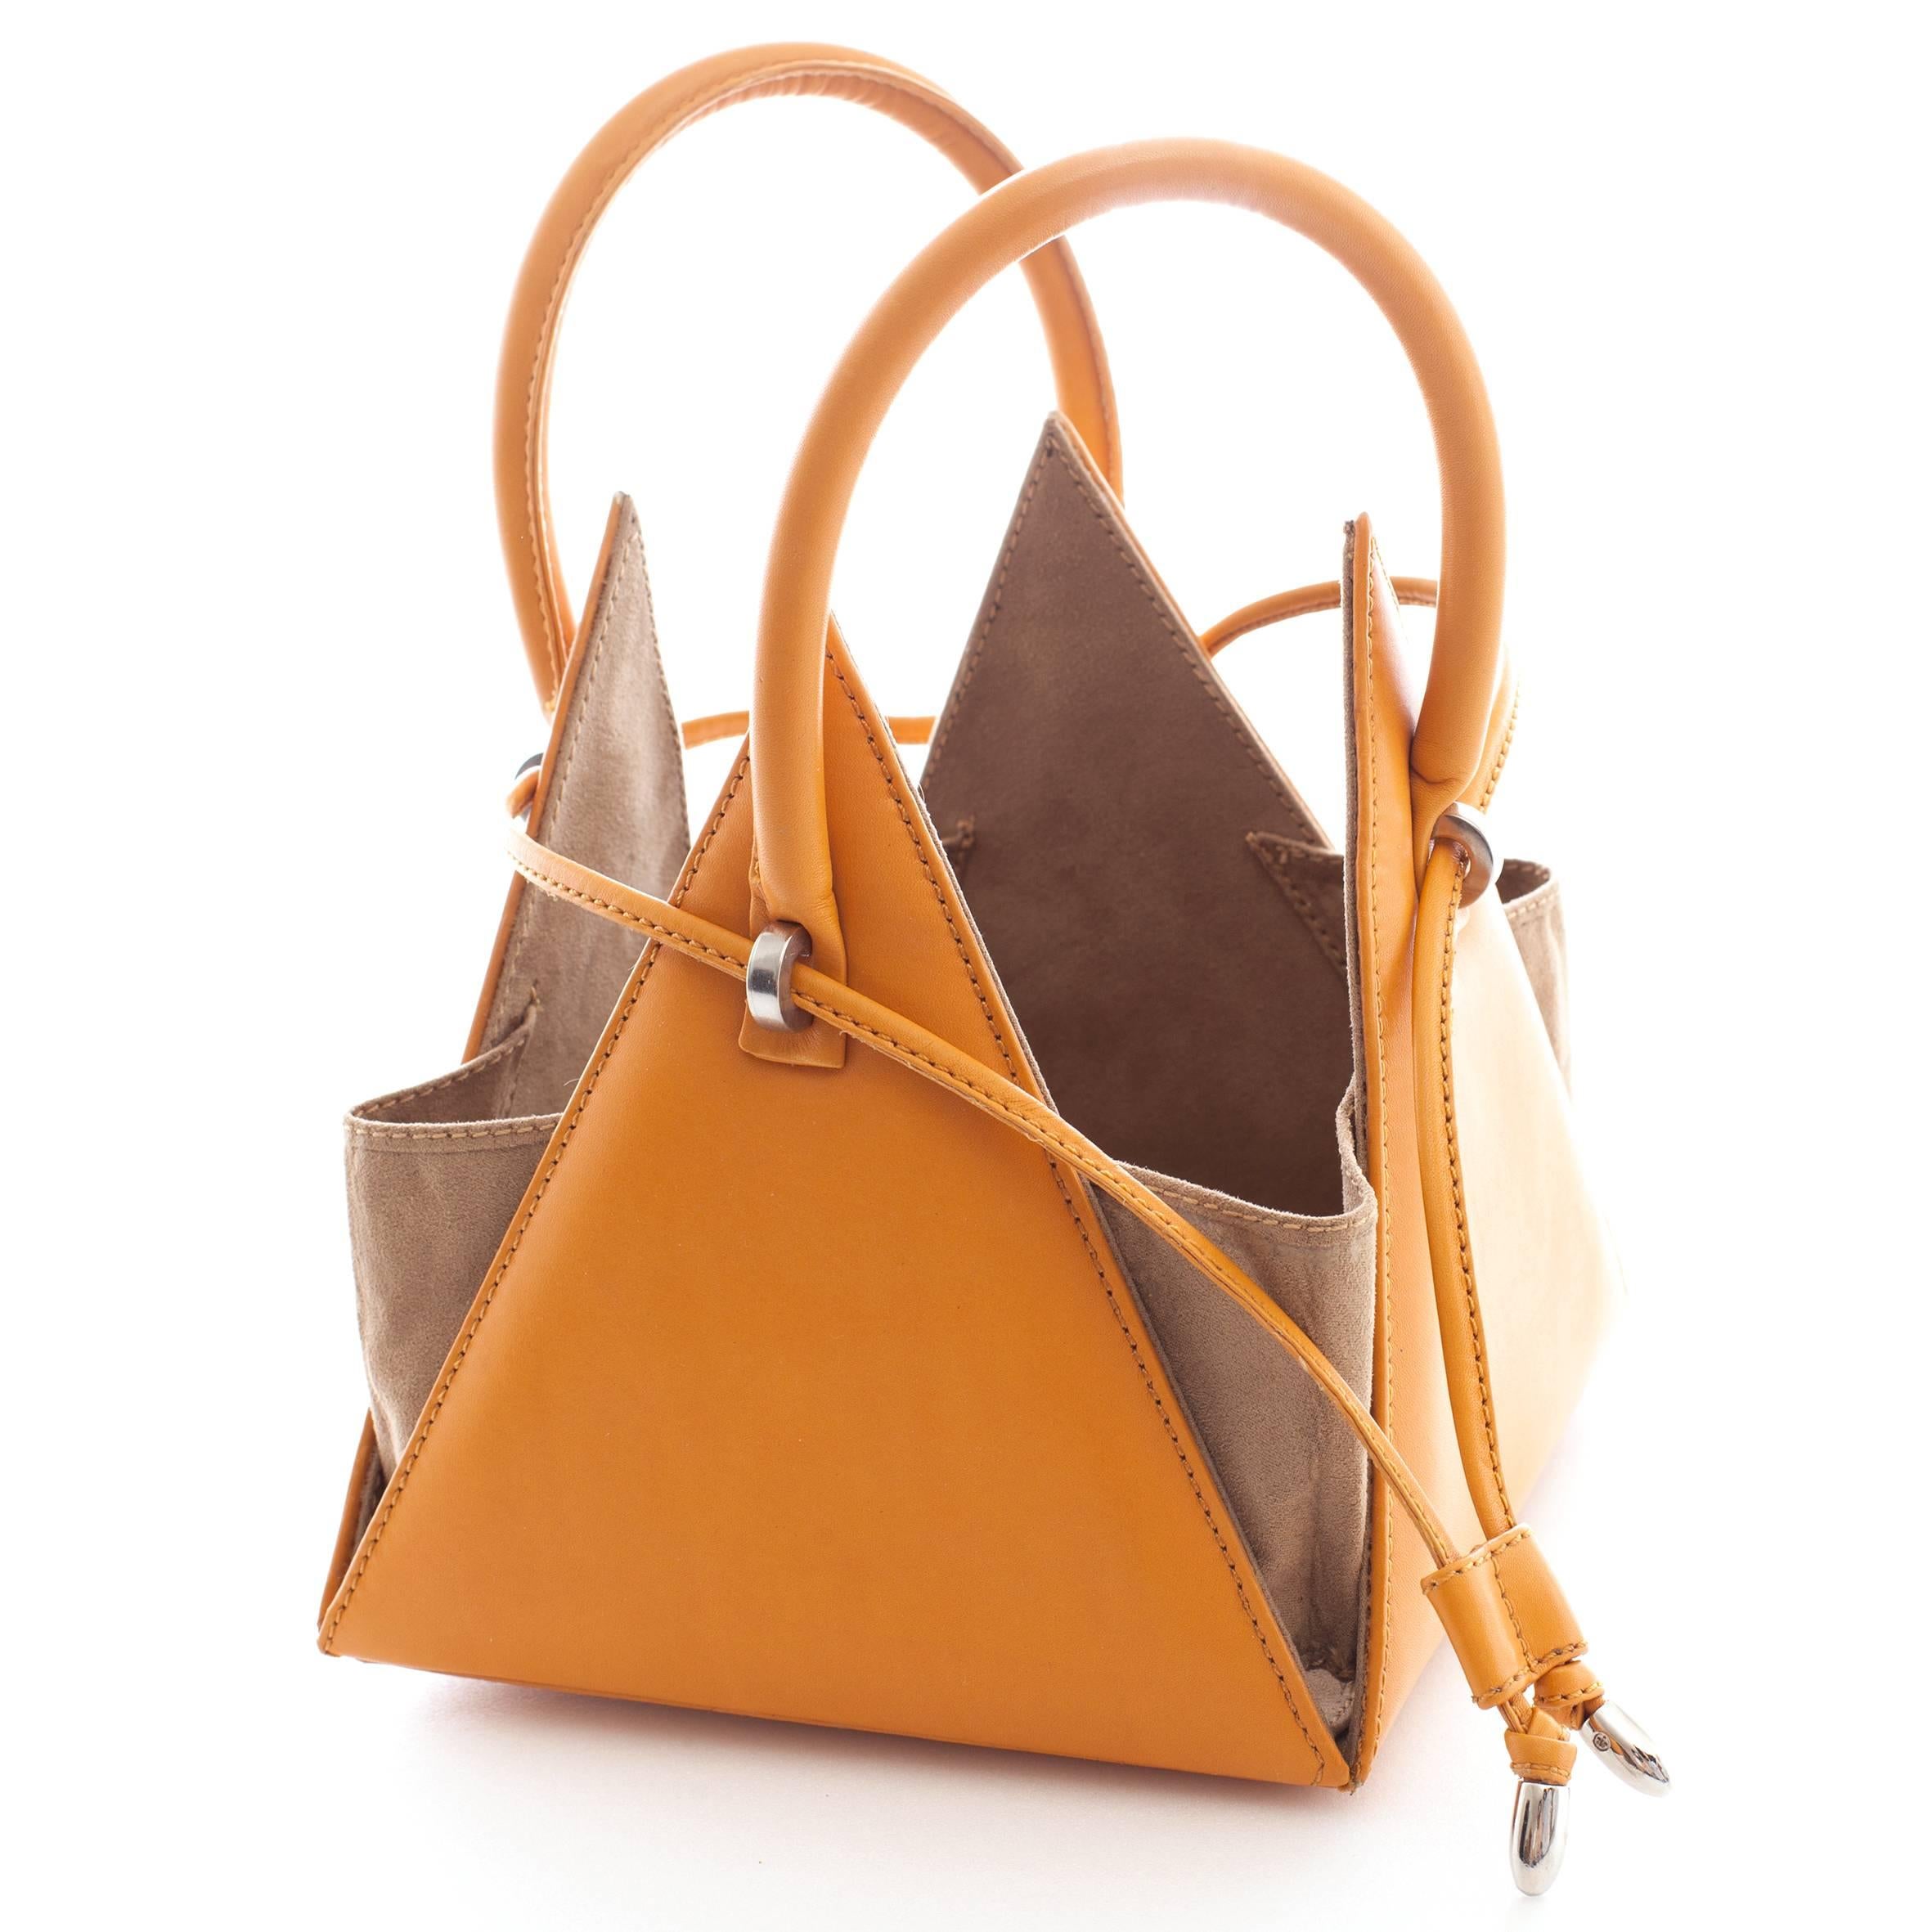 NitaSuri Lia Mustard Leather Pyramid Handbag In New Condition For Sale In Madrid, ES